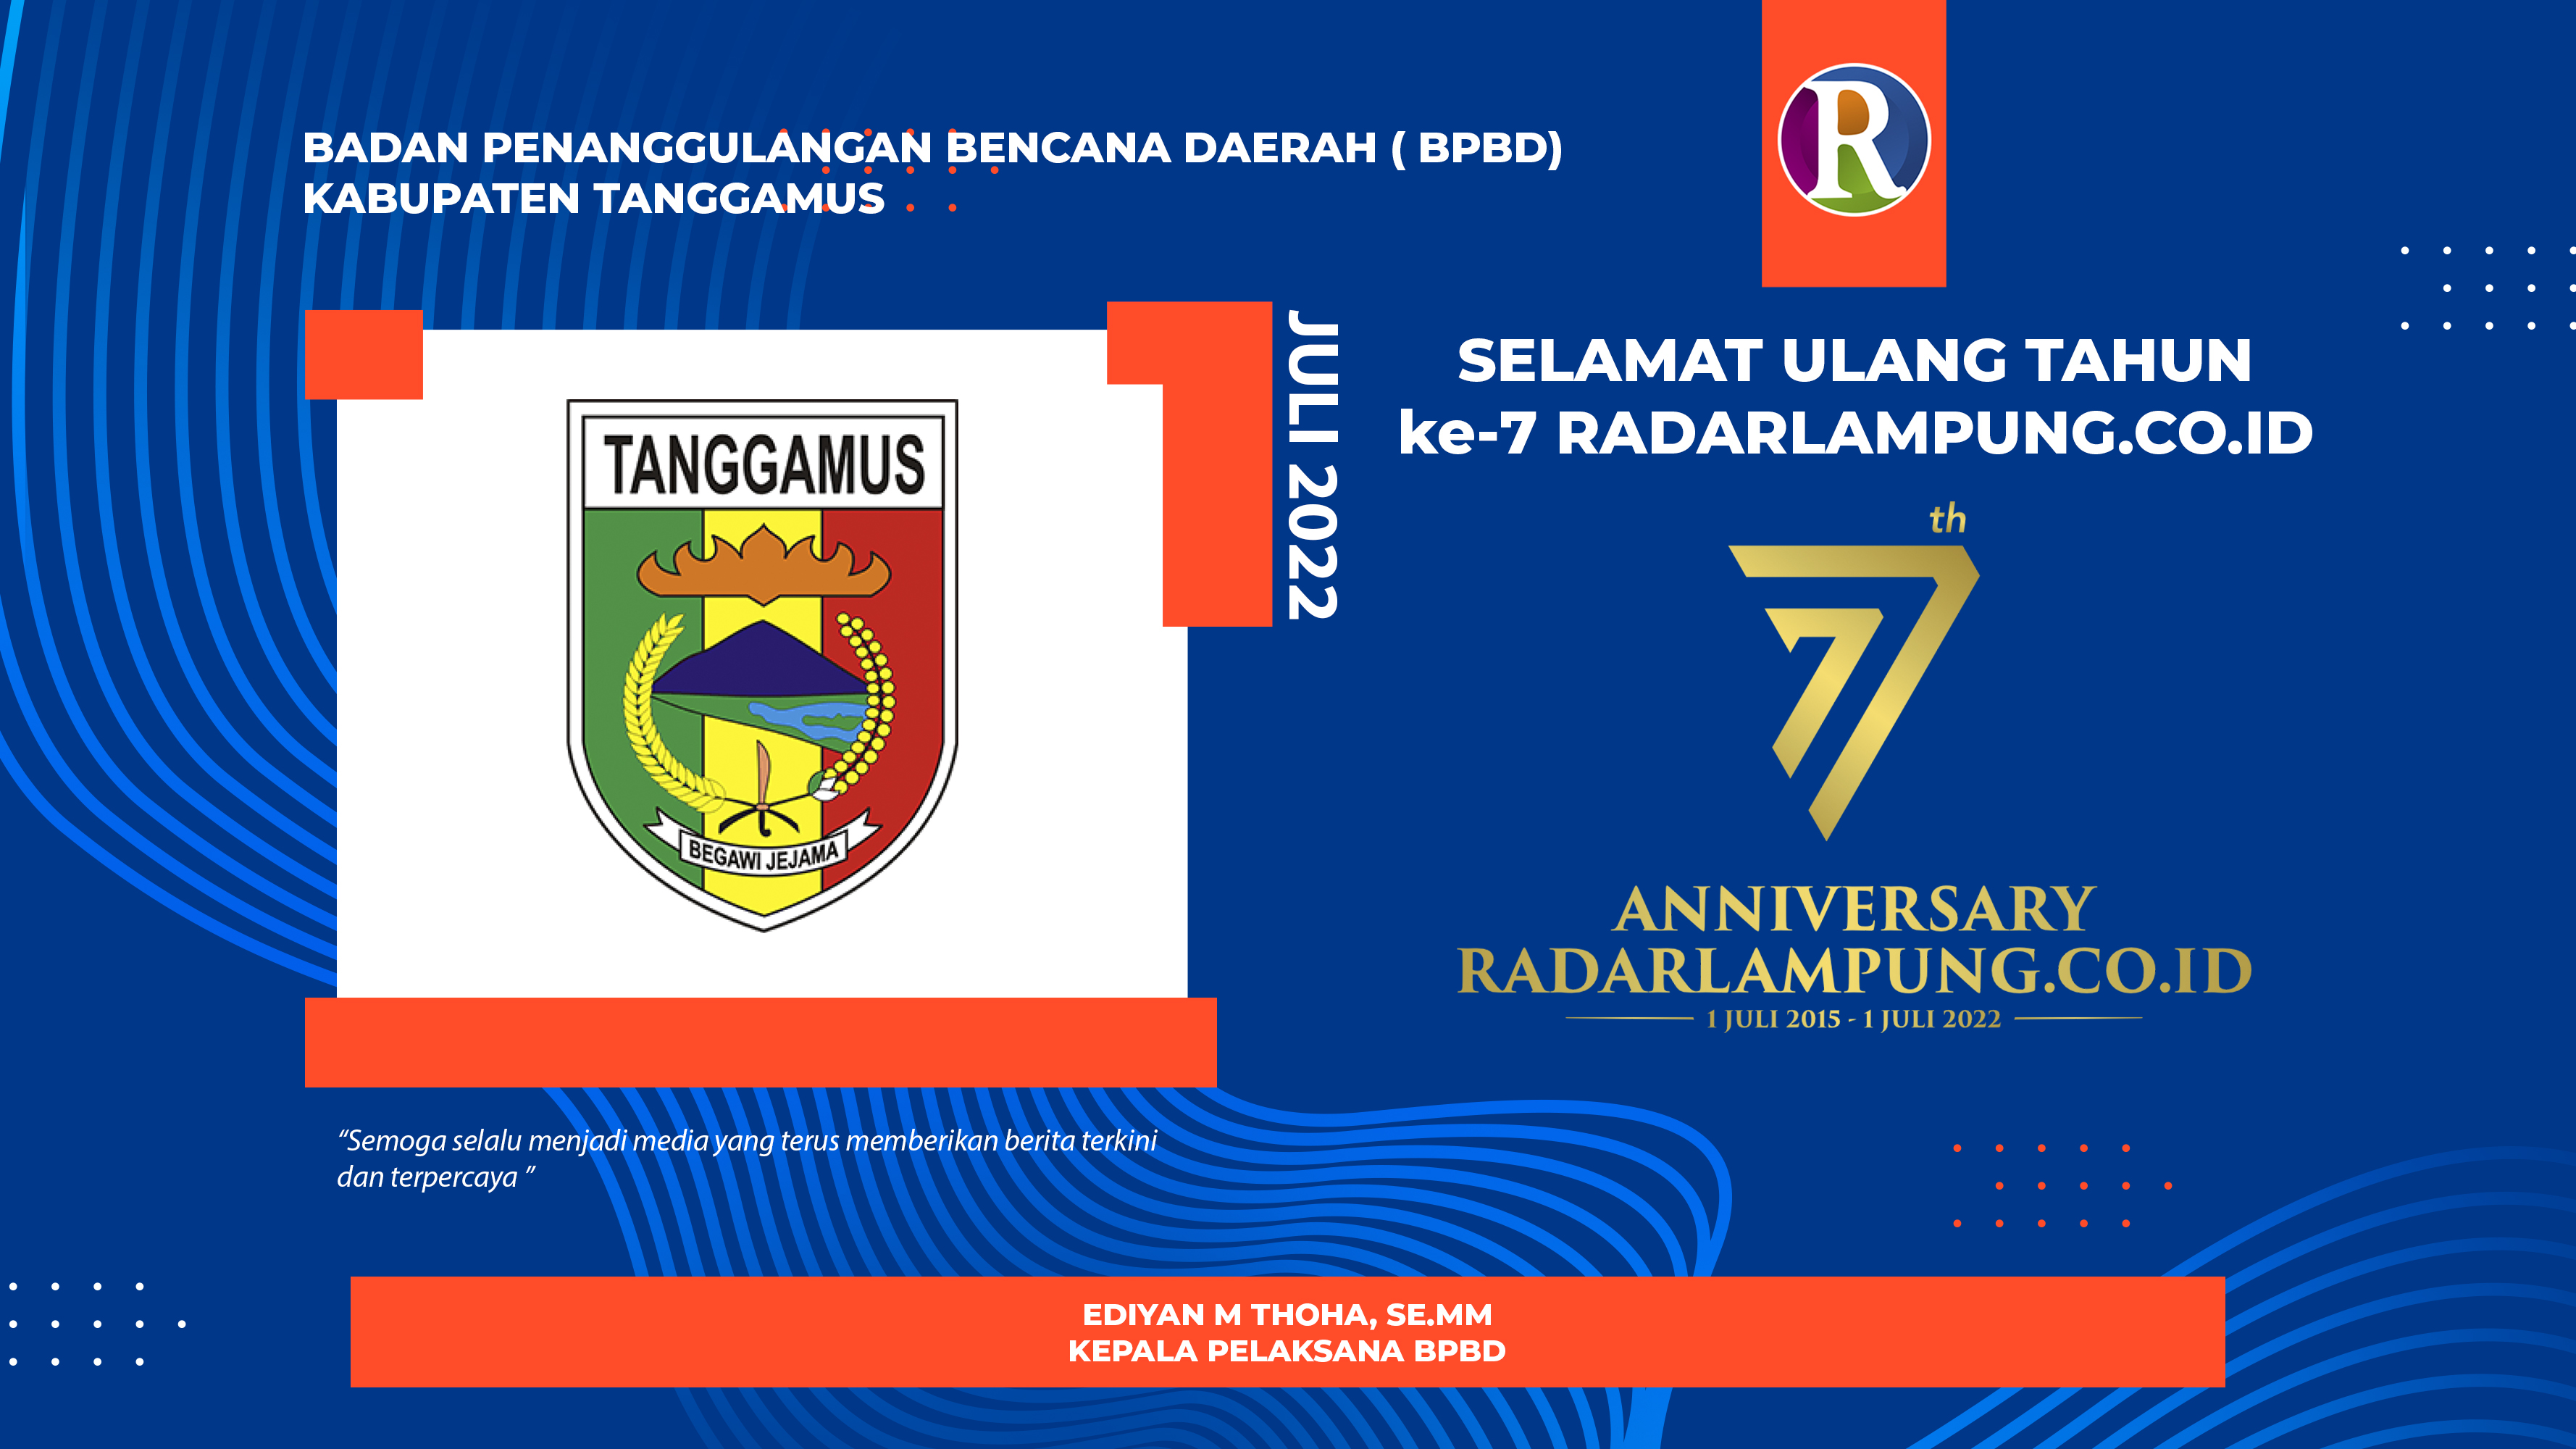 BPBD Kabupaten Tanggamus Mengucapkan Selamat Ulang Tahun ke-7 Radarlampung.co.id